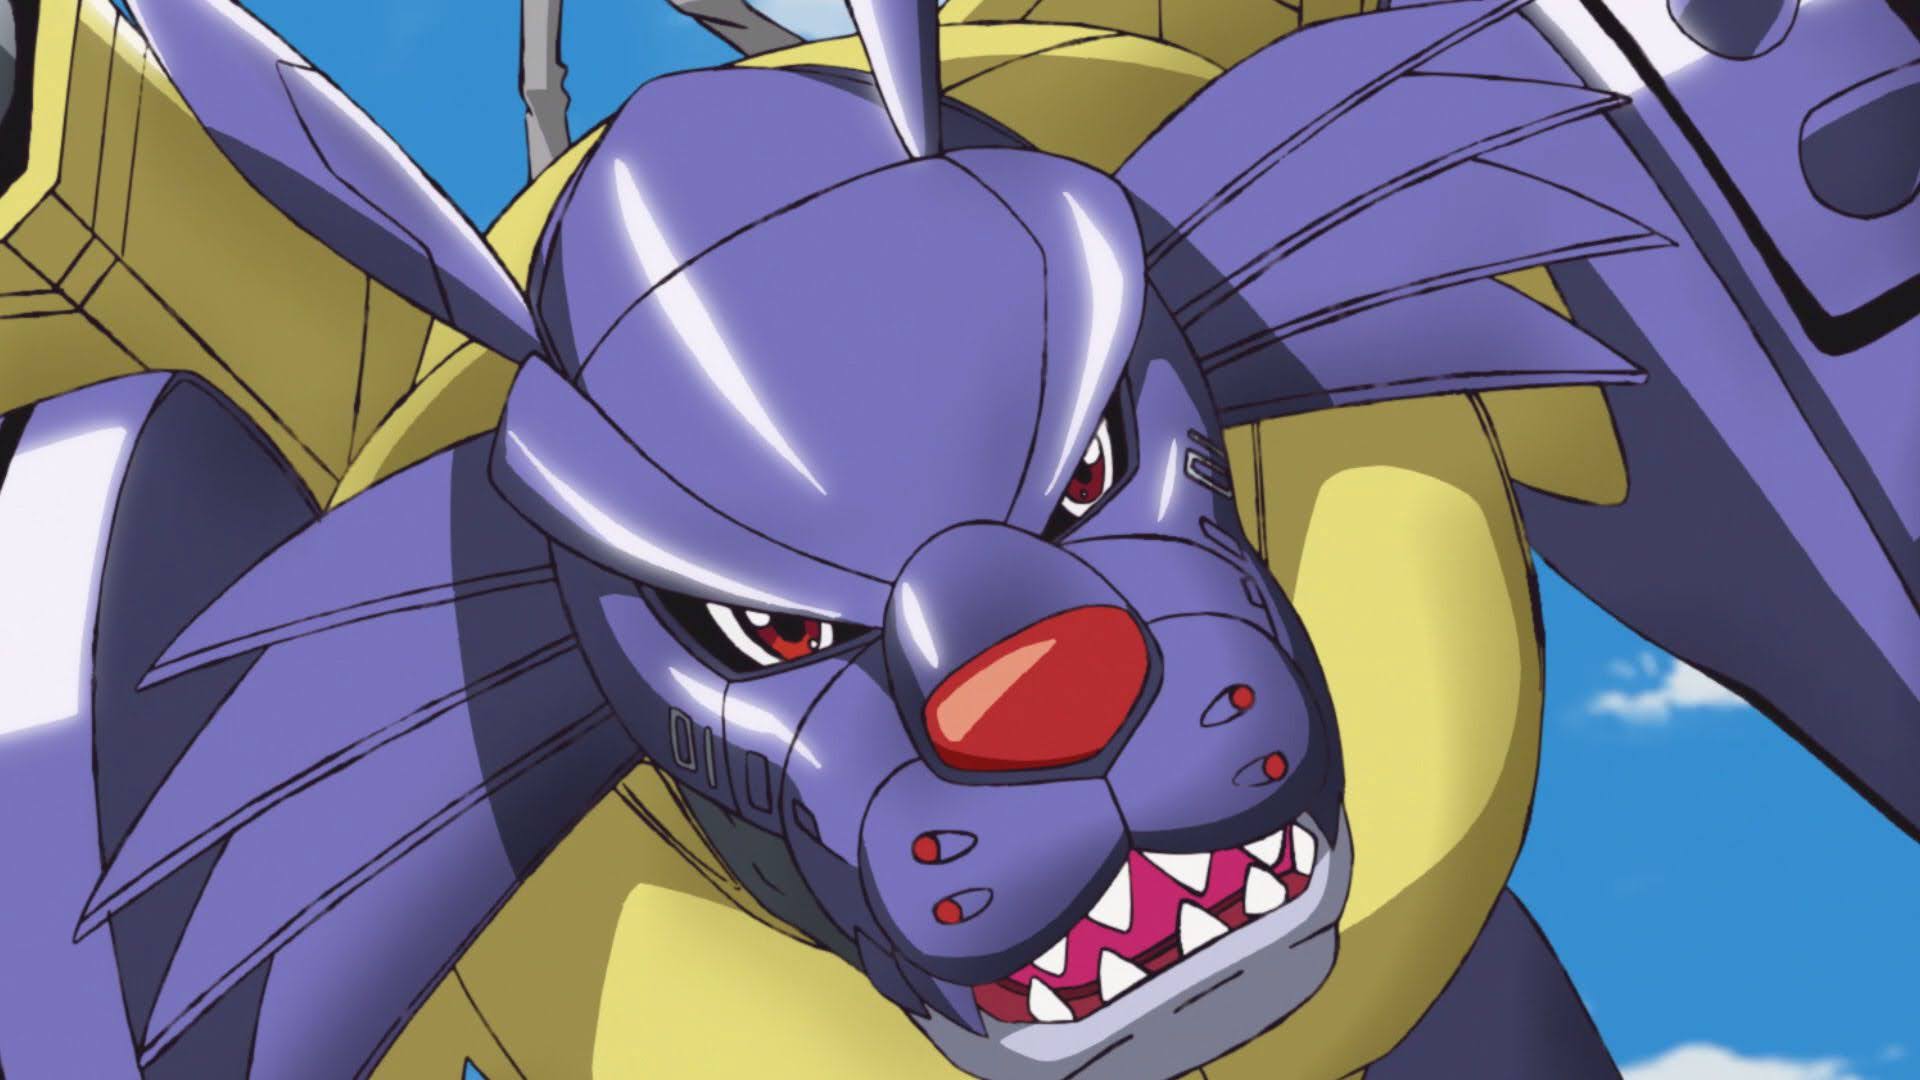 Metal Garurumon - Wikimon - The #1 Digimon wiki